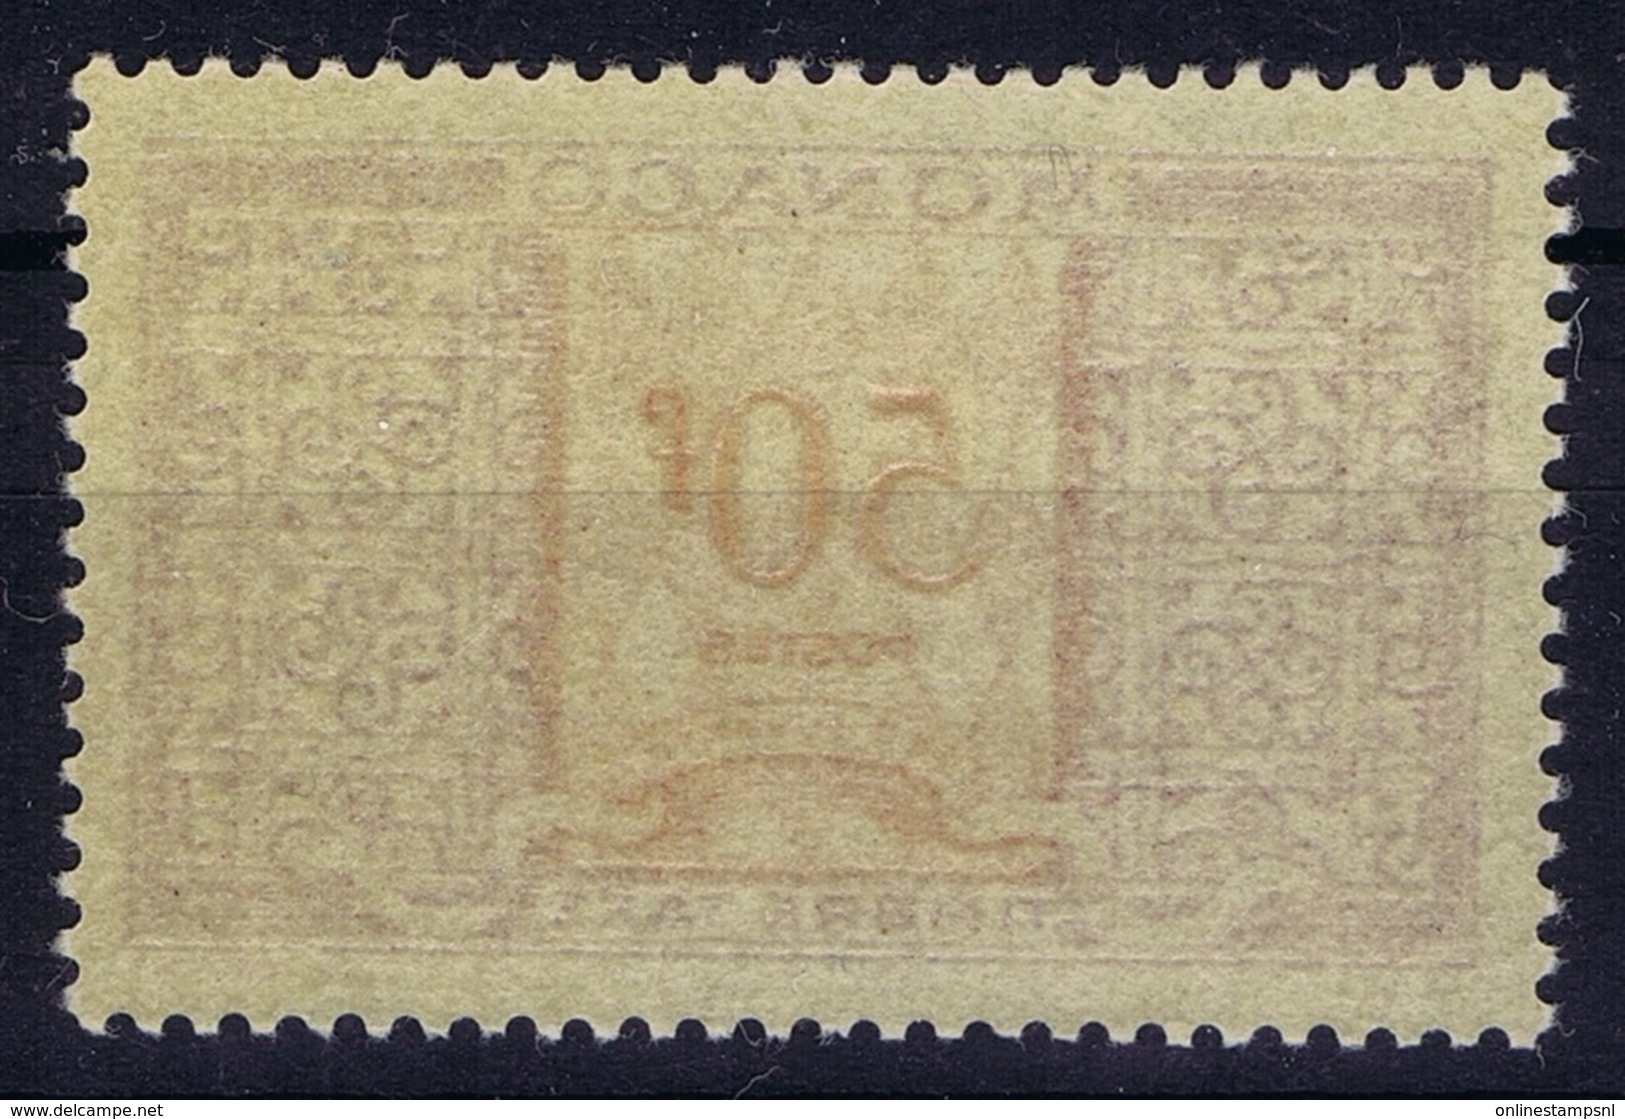 Monaco Mi 39 Timbre Tax   Postfrisch/neuf Sans Charniere /MNH/** 1950 - Strafport